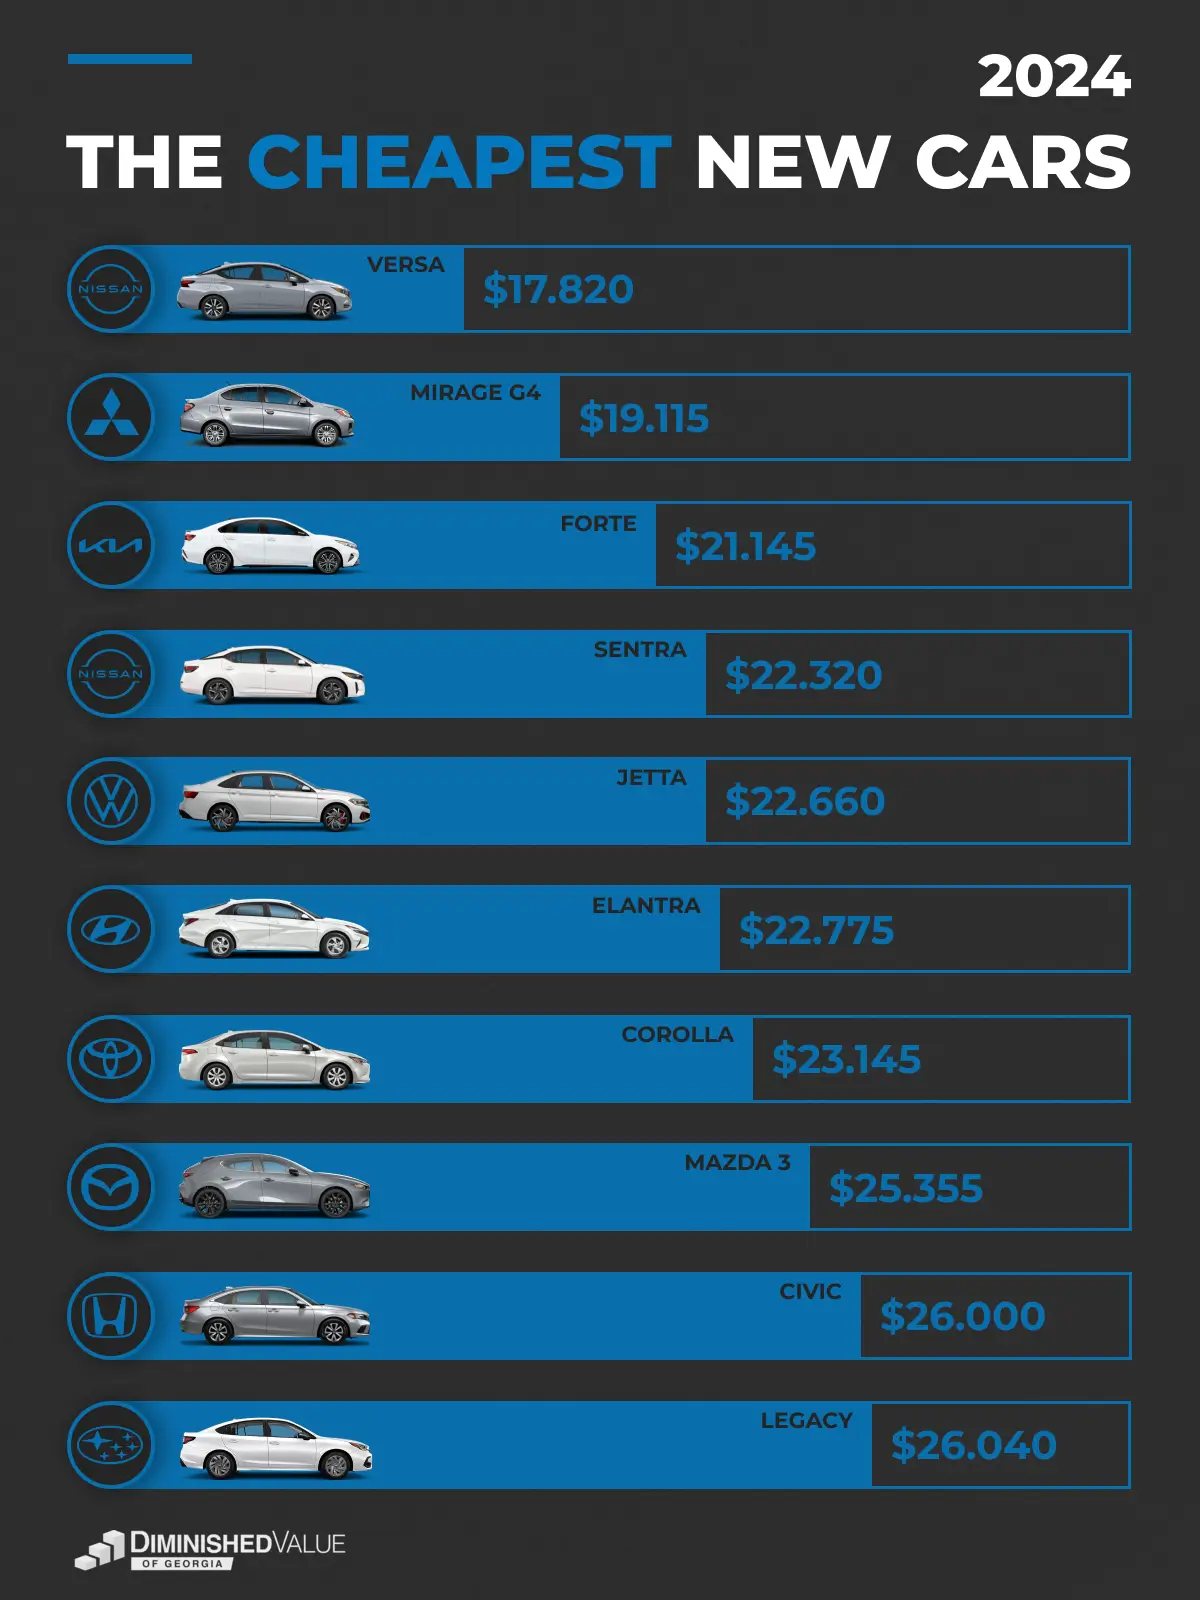 Infographic listing the top 10 cheapest new cars of 2024: Nissan Versa, Mitsubishi Mirage G4, Kia Forte, Nissan Sentra, Volkswagen Jetta, Hyundai Elantra, Toyota Corolla, Mazda 3, Honda Civic, and Subaru Legacy.